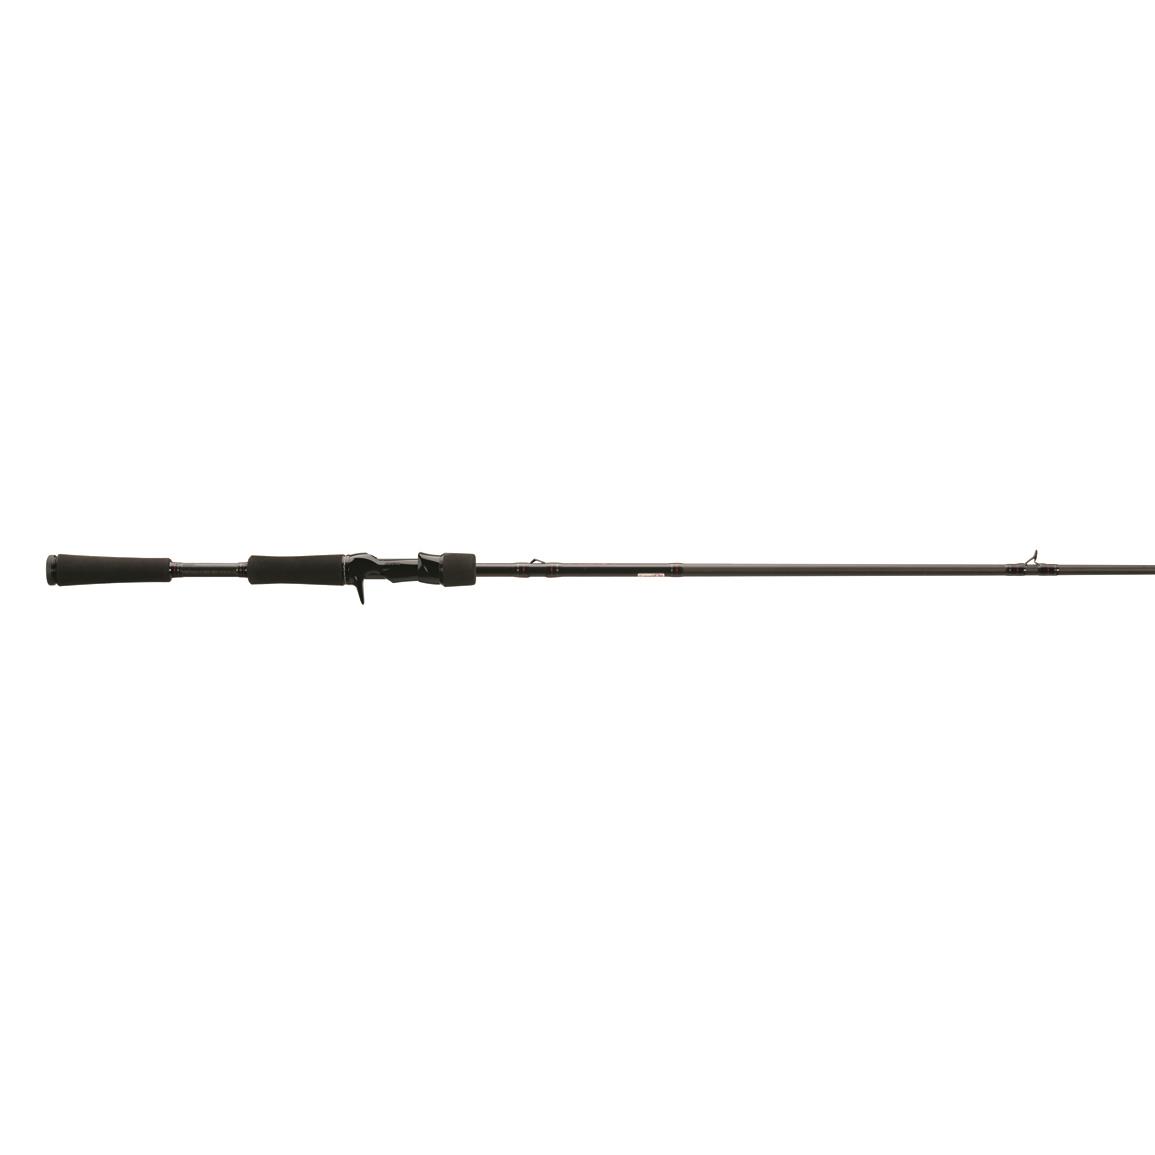 13 Fishing Meta Series Crank Casting Rod, 7'4" Length, Moderate Action